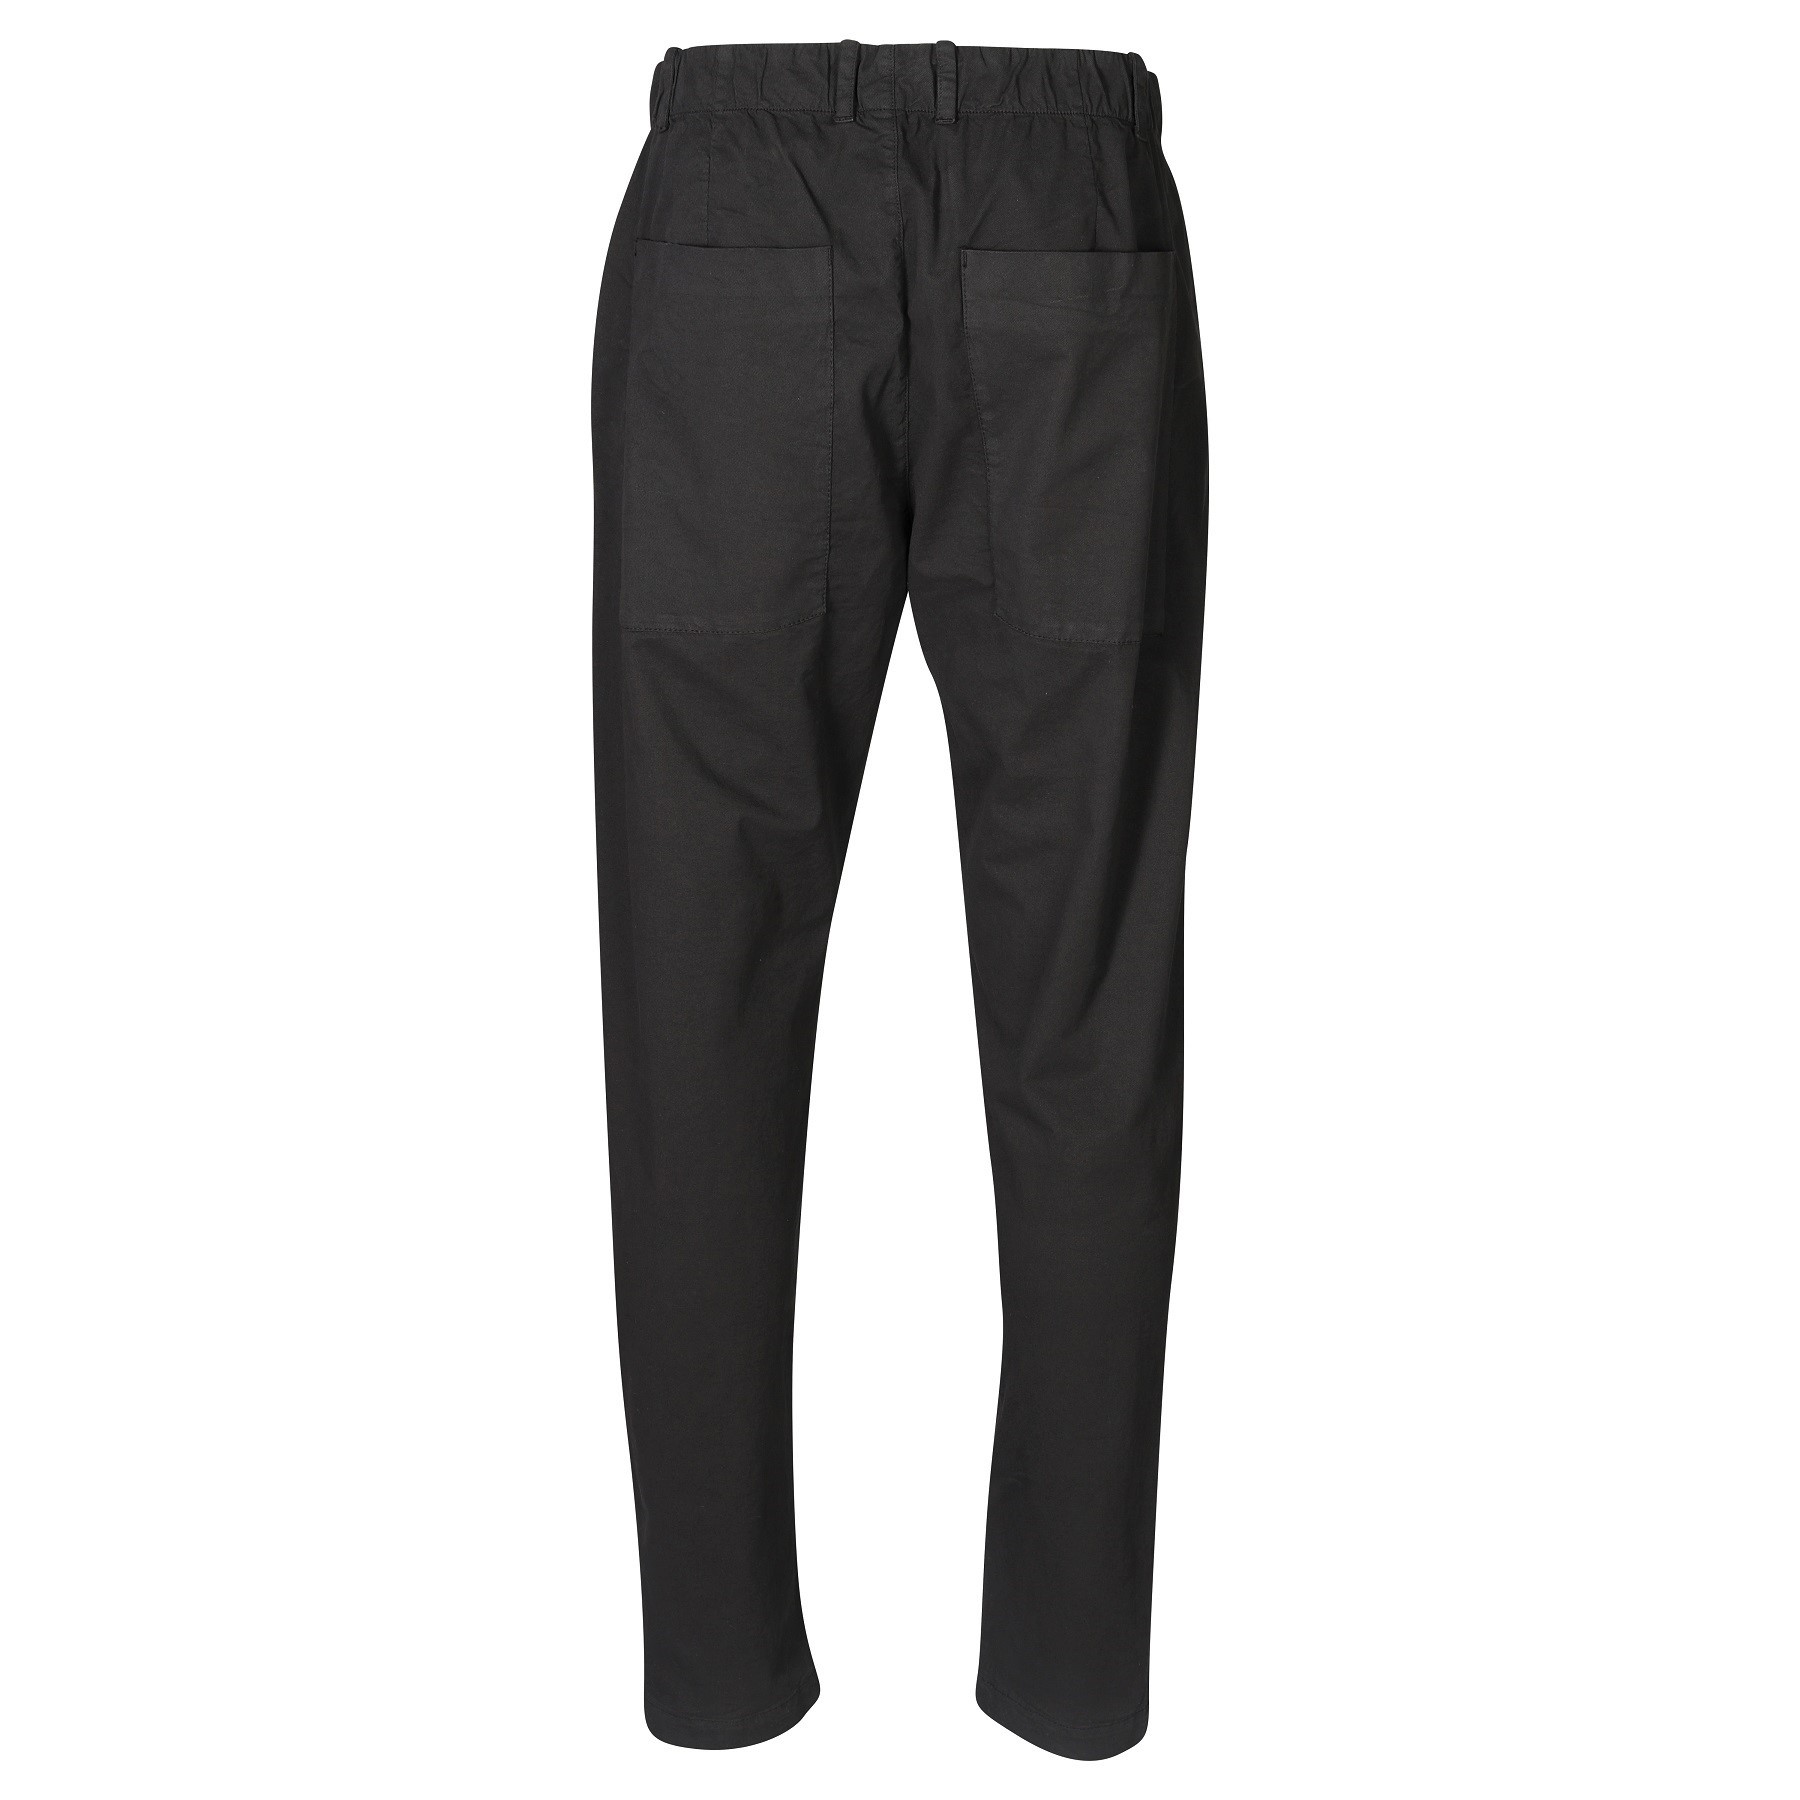 TRANSIT UOMO Light Cotton Stretch Trouser in Black S